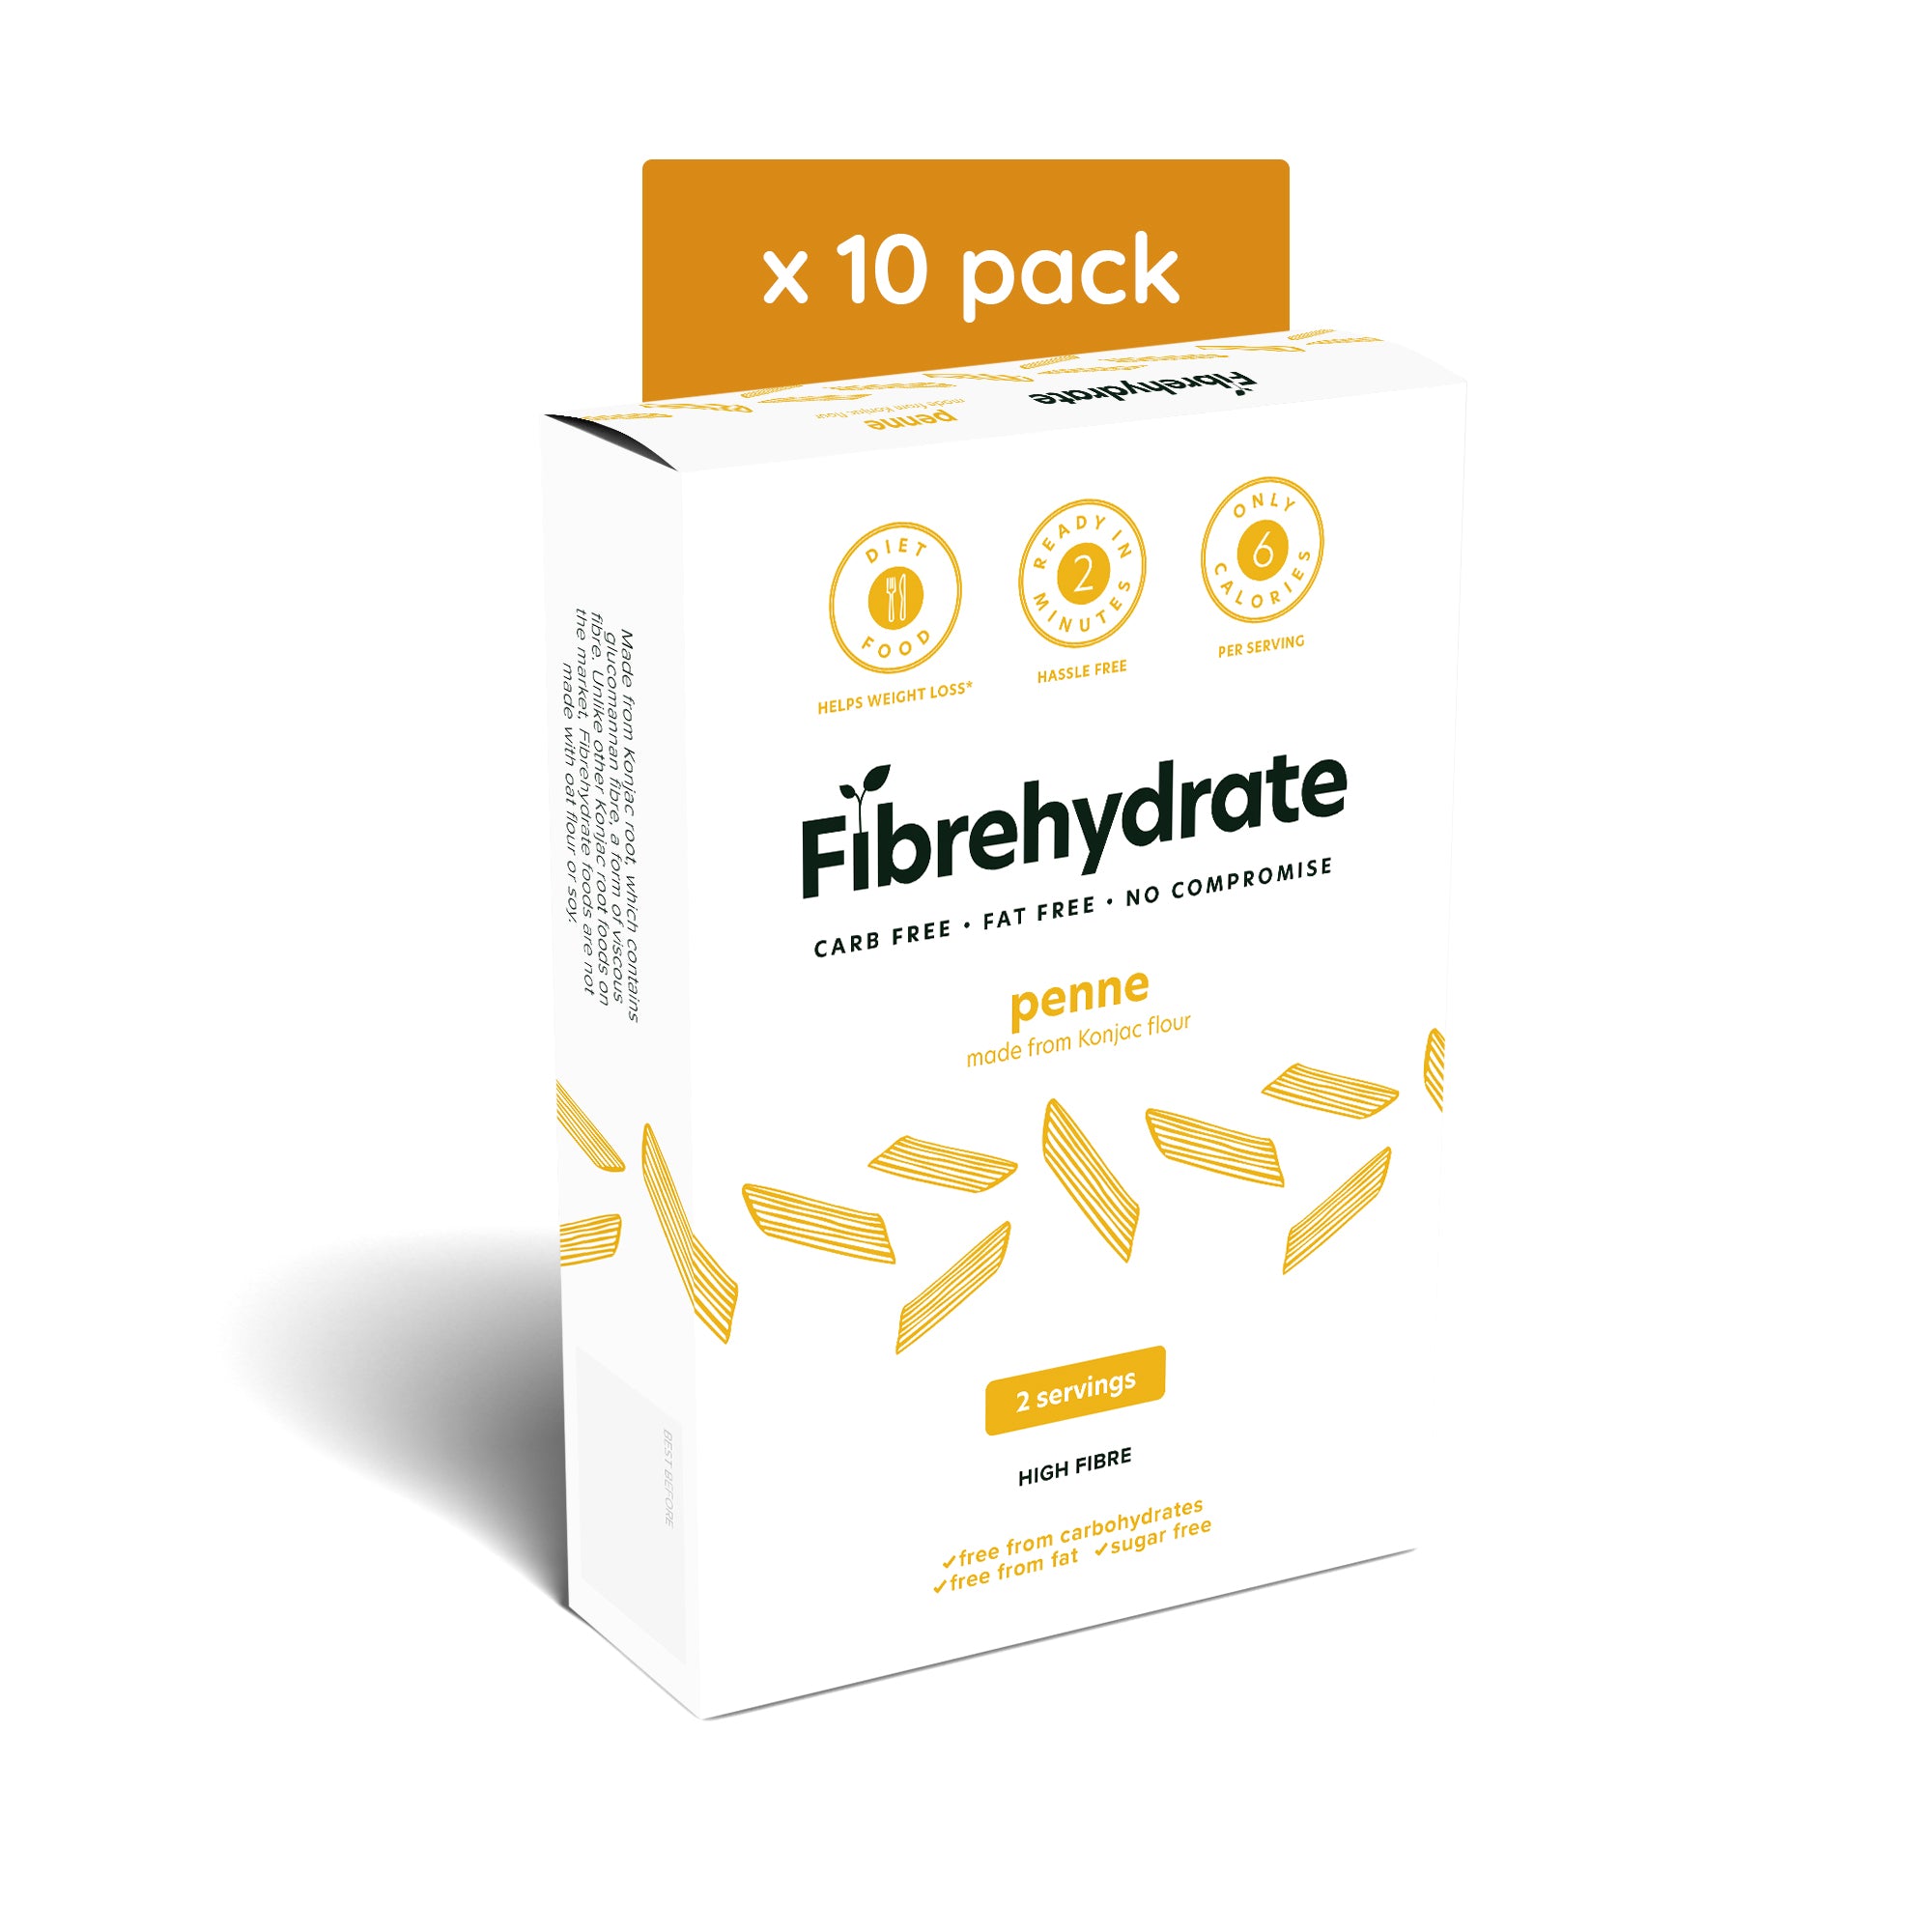 Fibrehydrate Penne Pasta (10 pack)